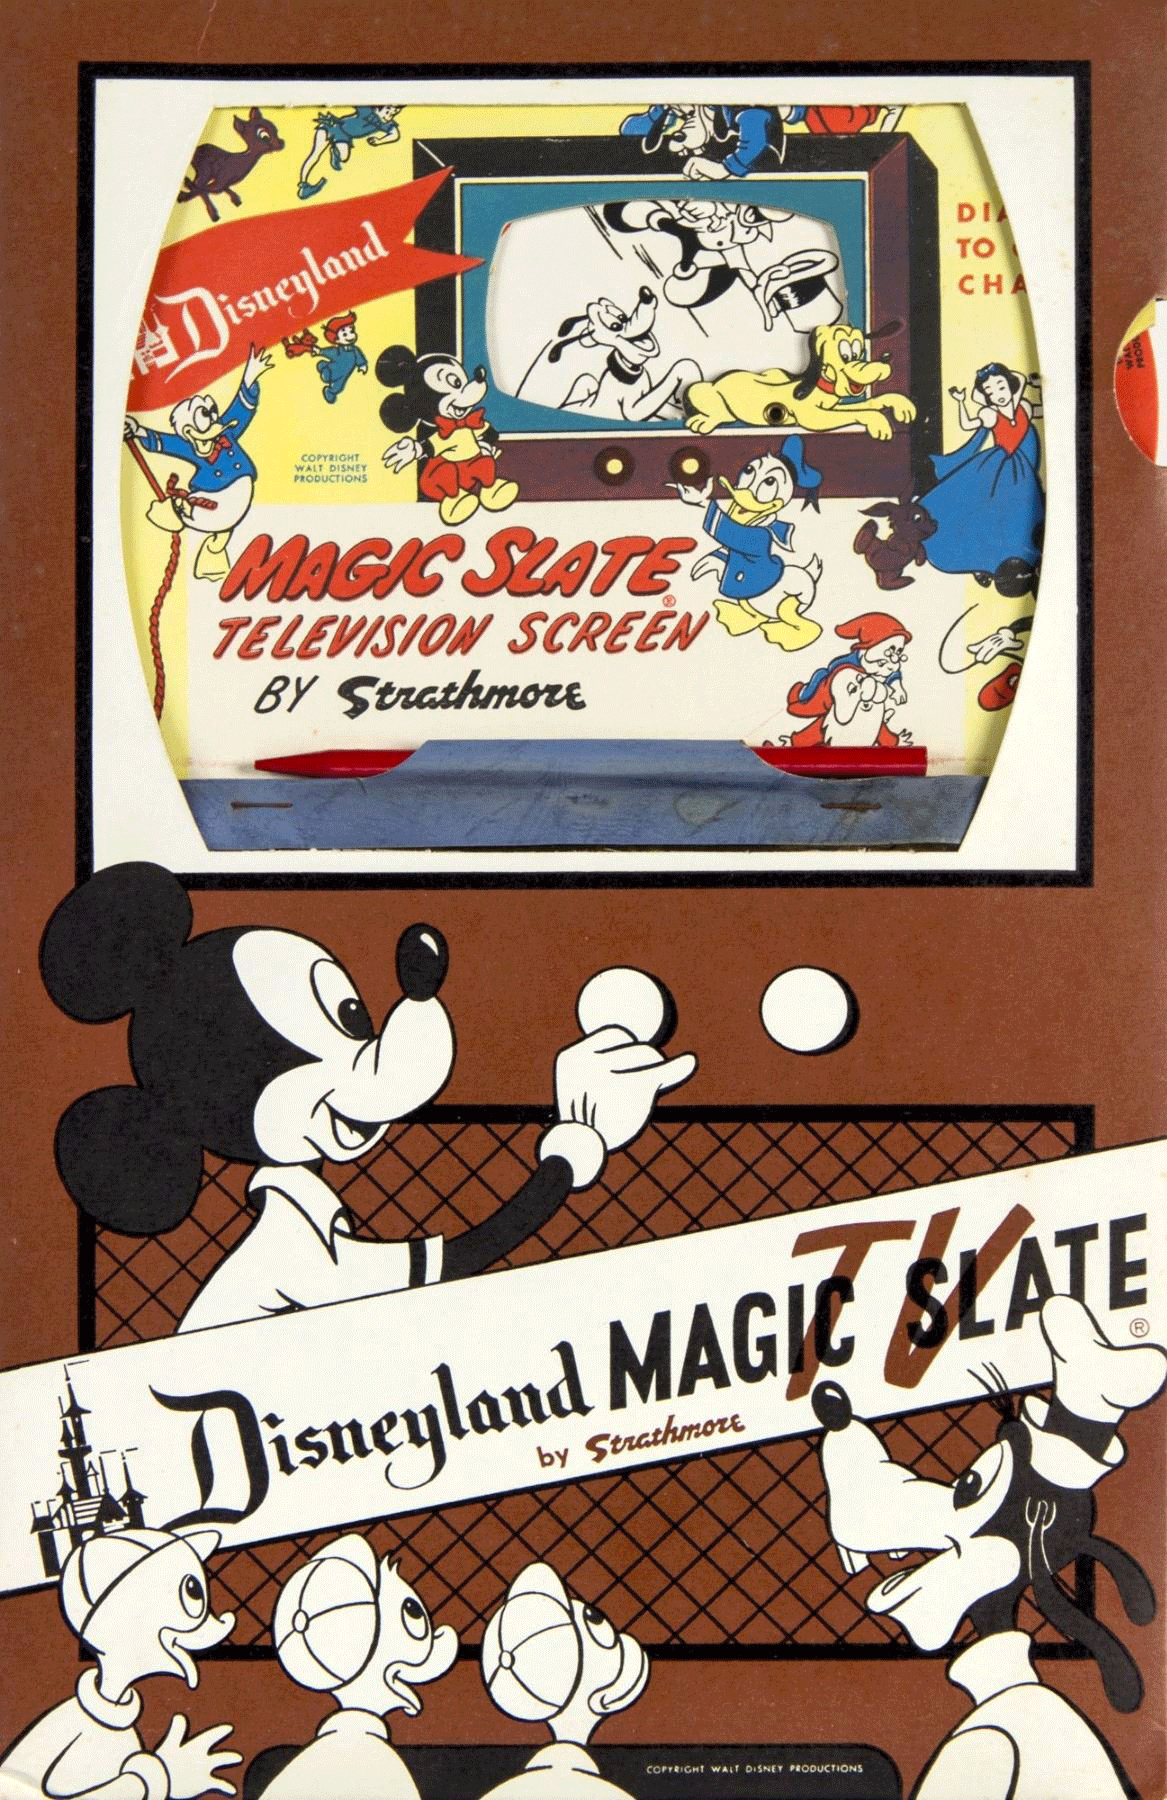 Adventurelandia — 1950s Disneyland Magic Slate Television Screen